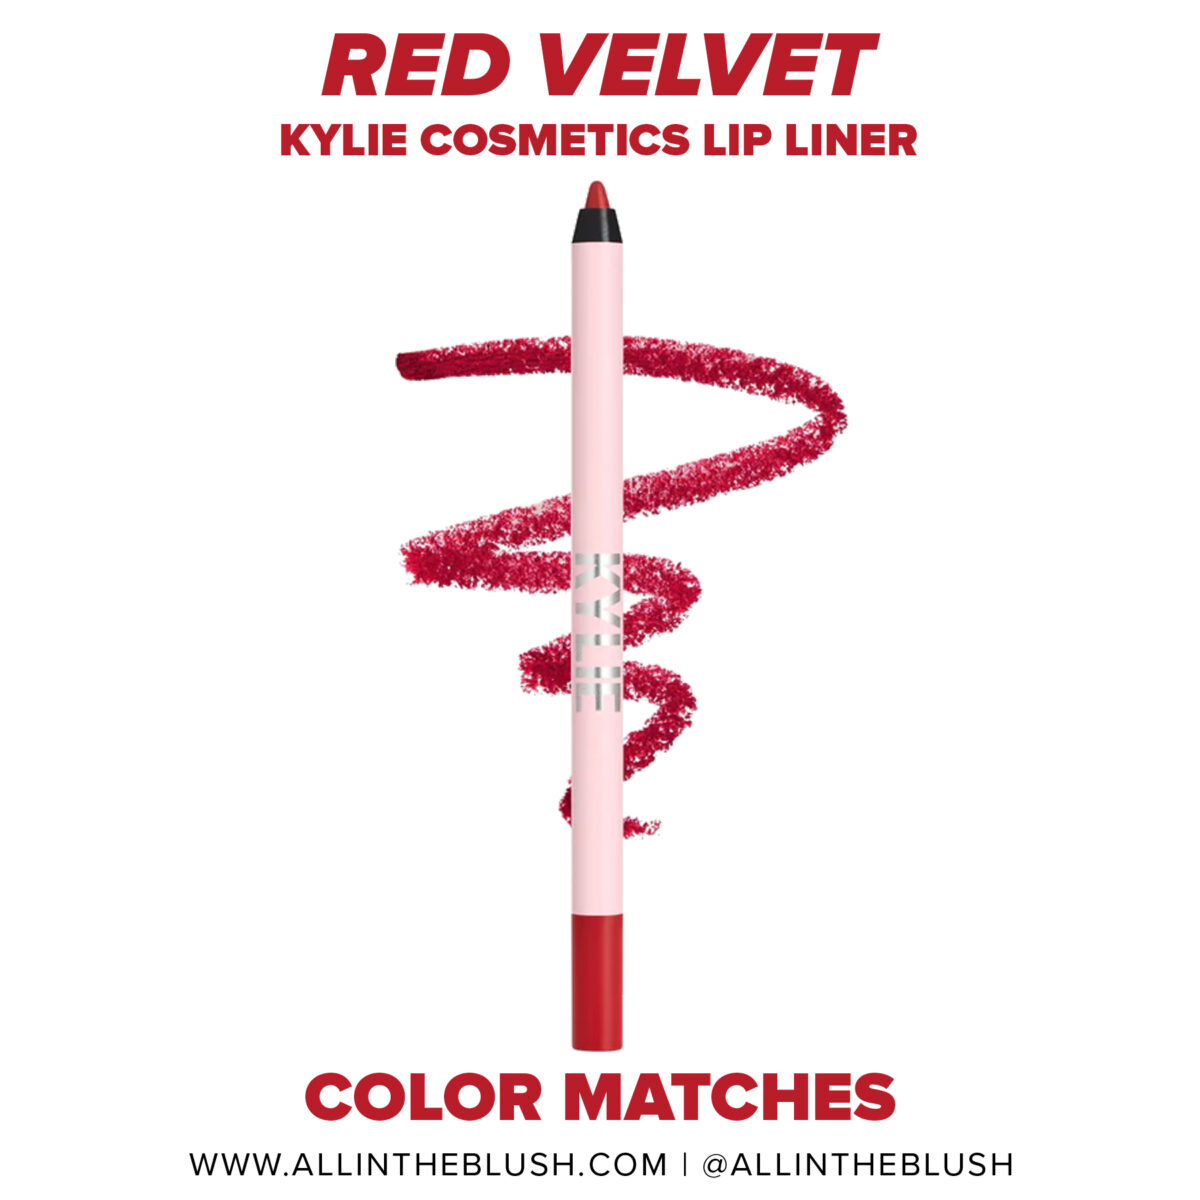 Kylie Cosmetics Red Velvet Lip Liner Dupes